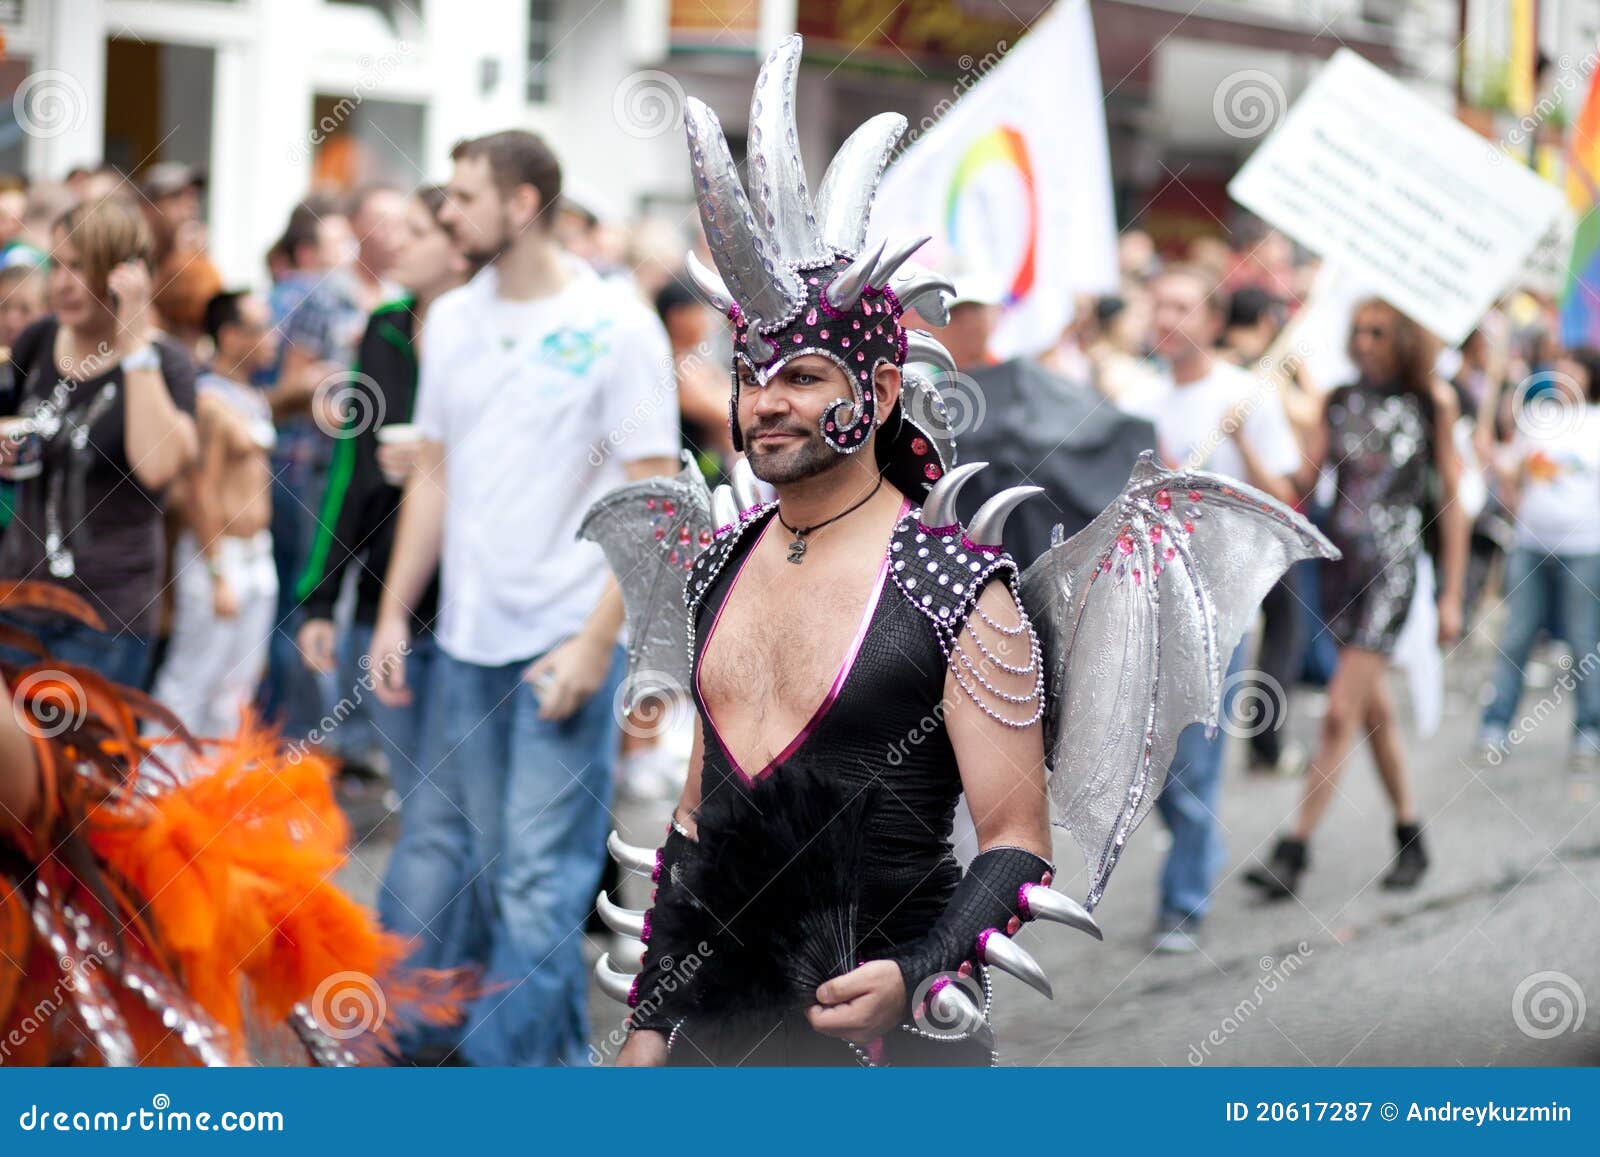 Hamburg gay pride CSD Straßenfest